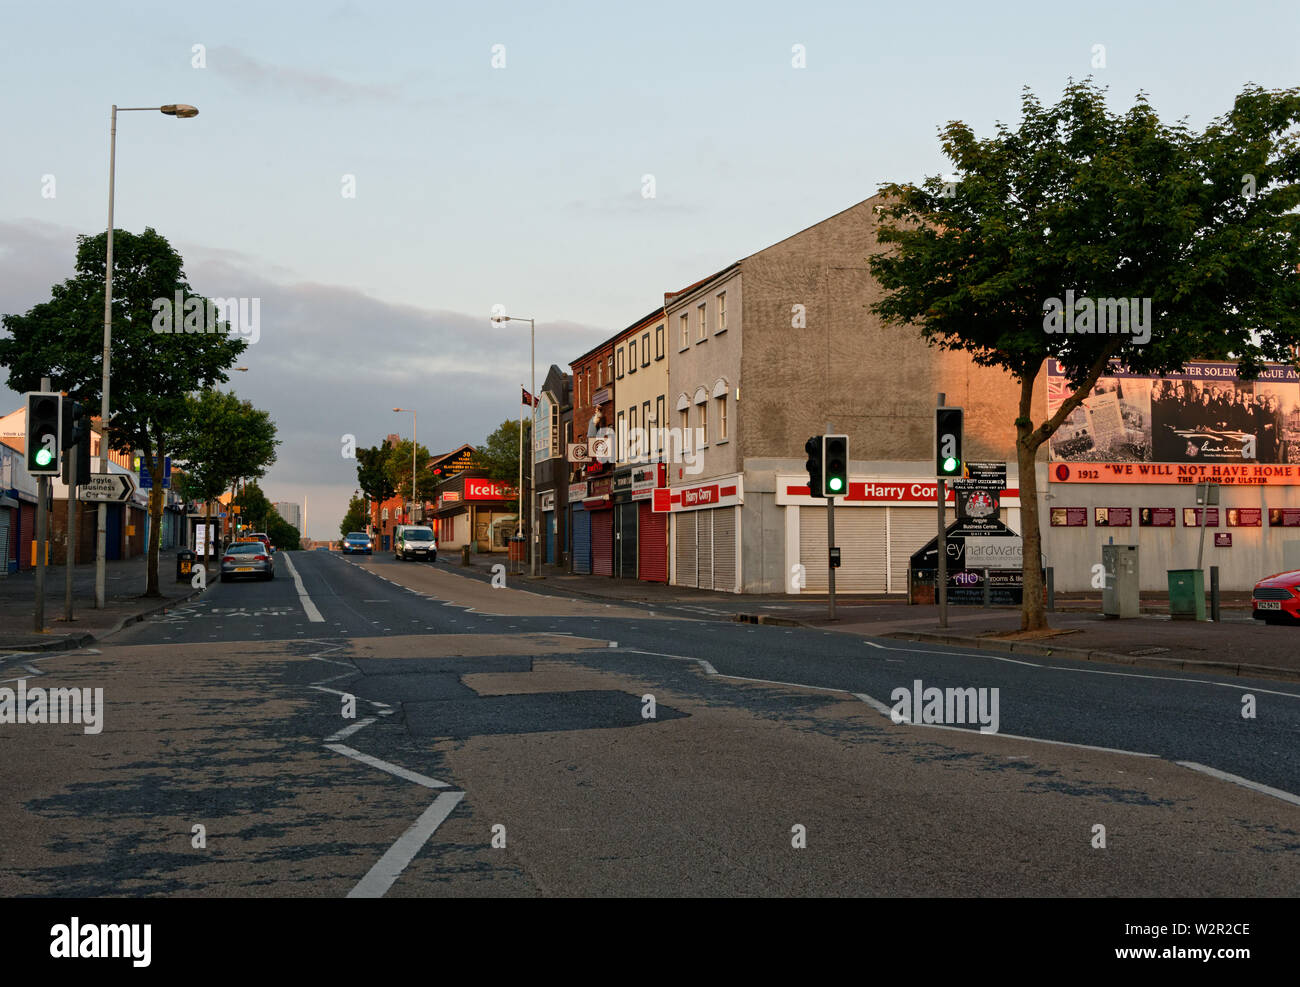 Shankill Road, Belfast, Nordirland. Wandmalereien an der Shankill Road. Stockfoto